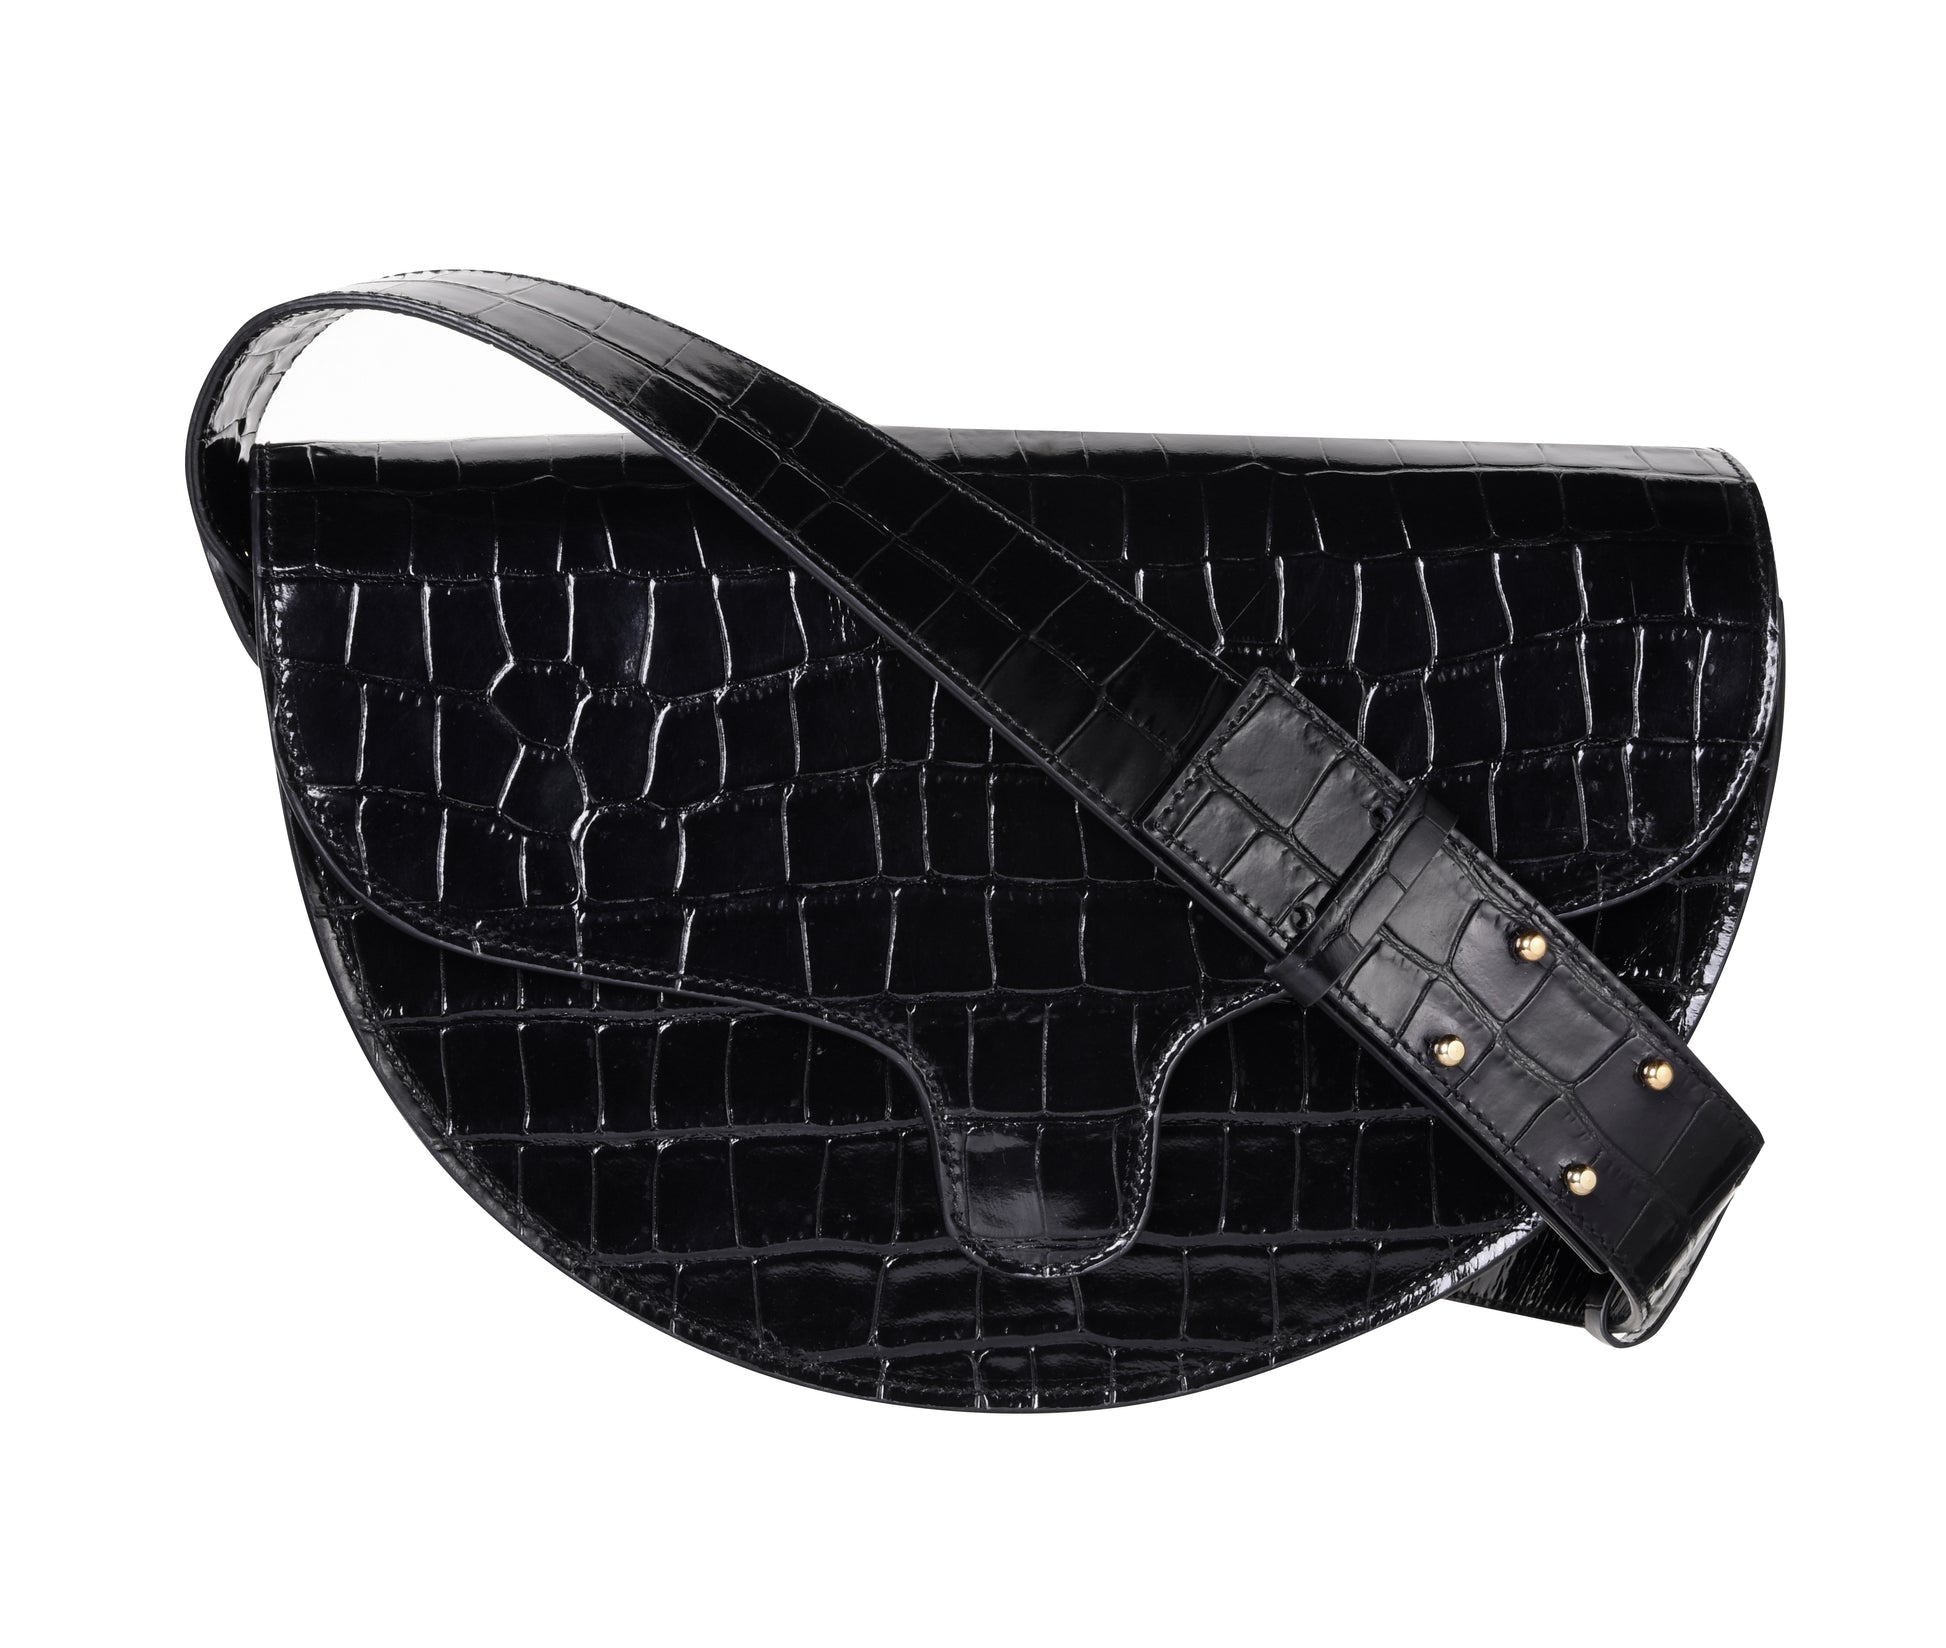 CNicol Black Croc Leather Lily Bag